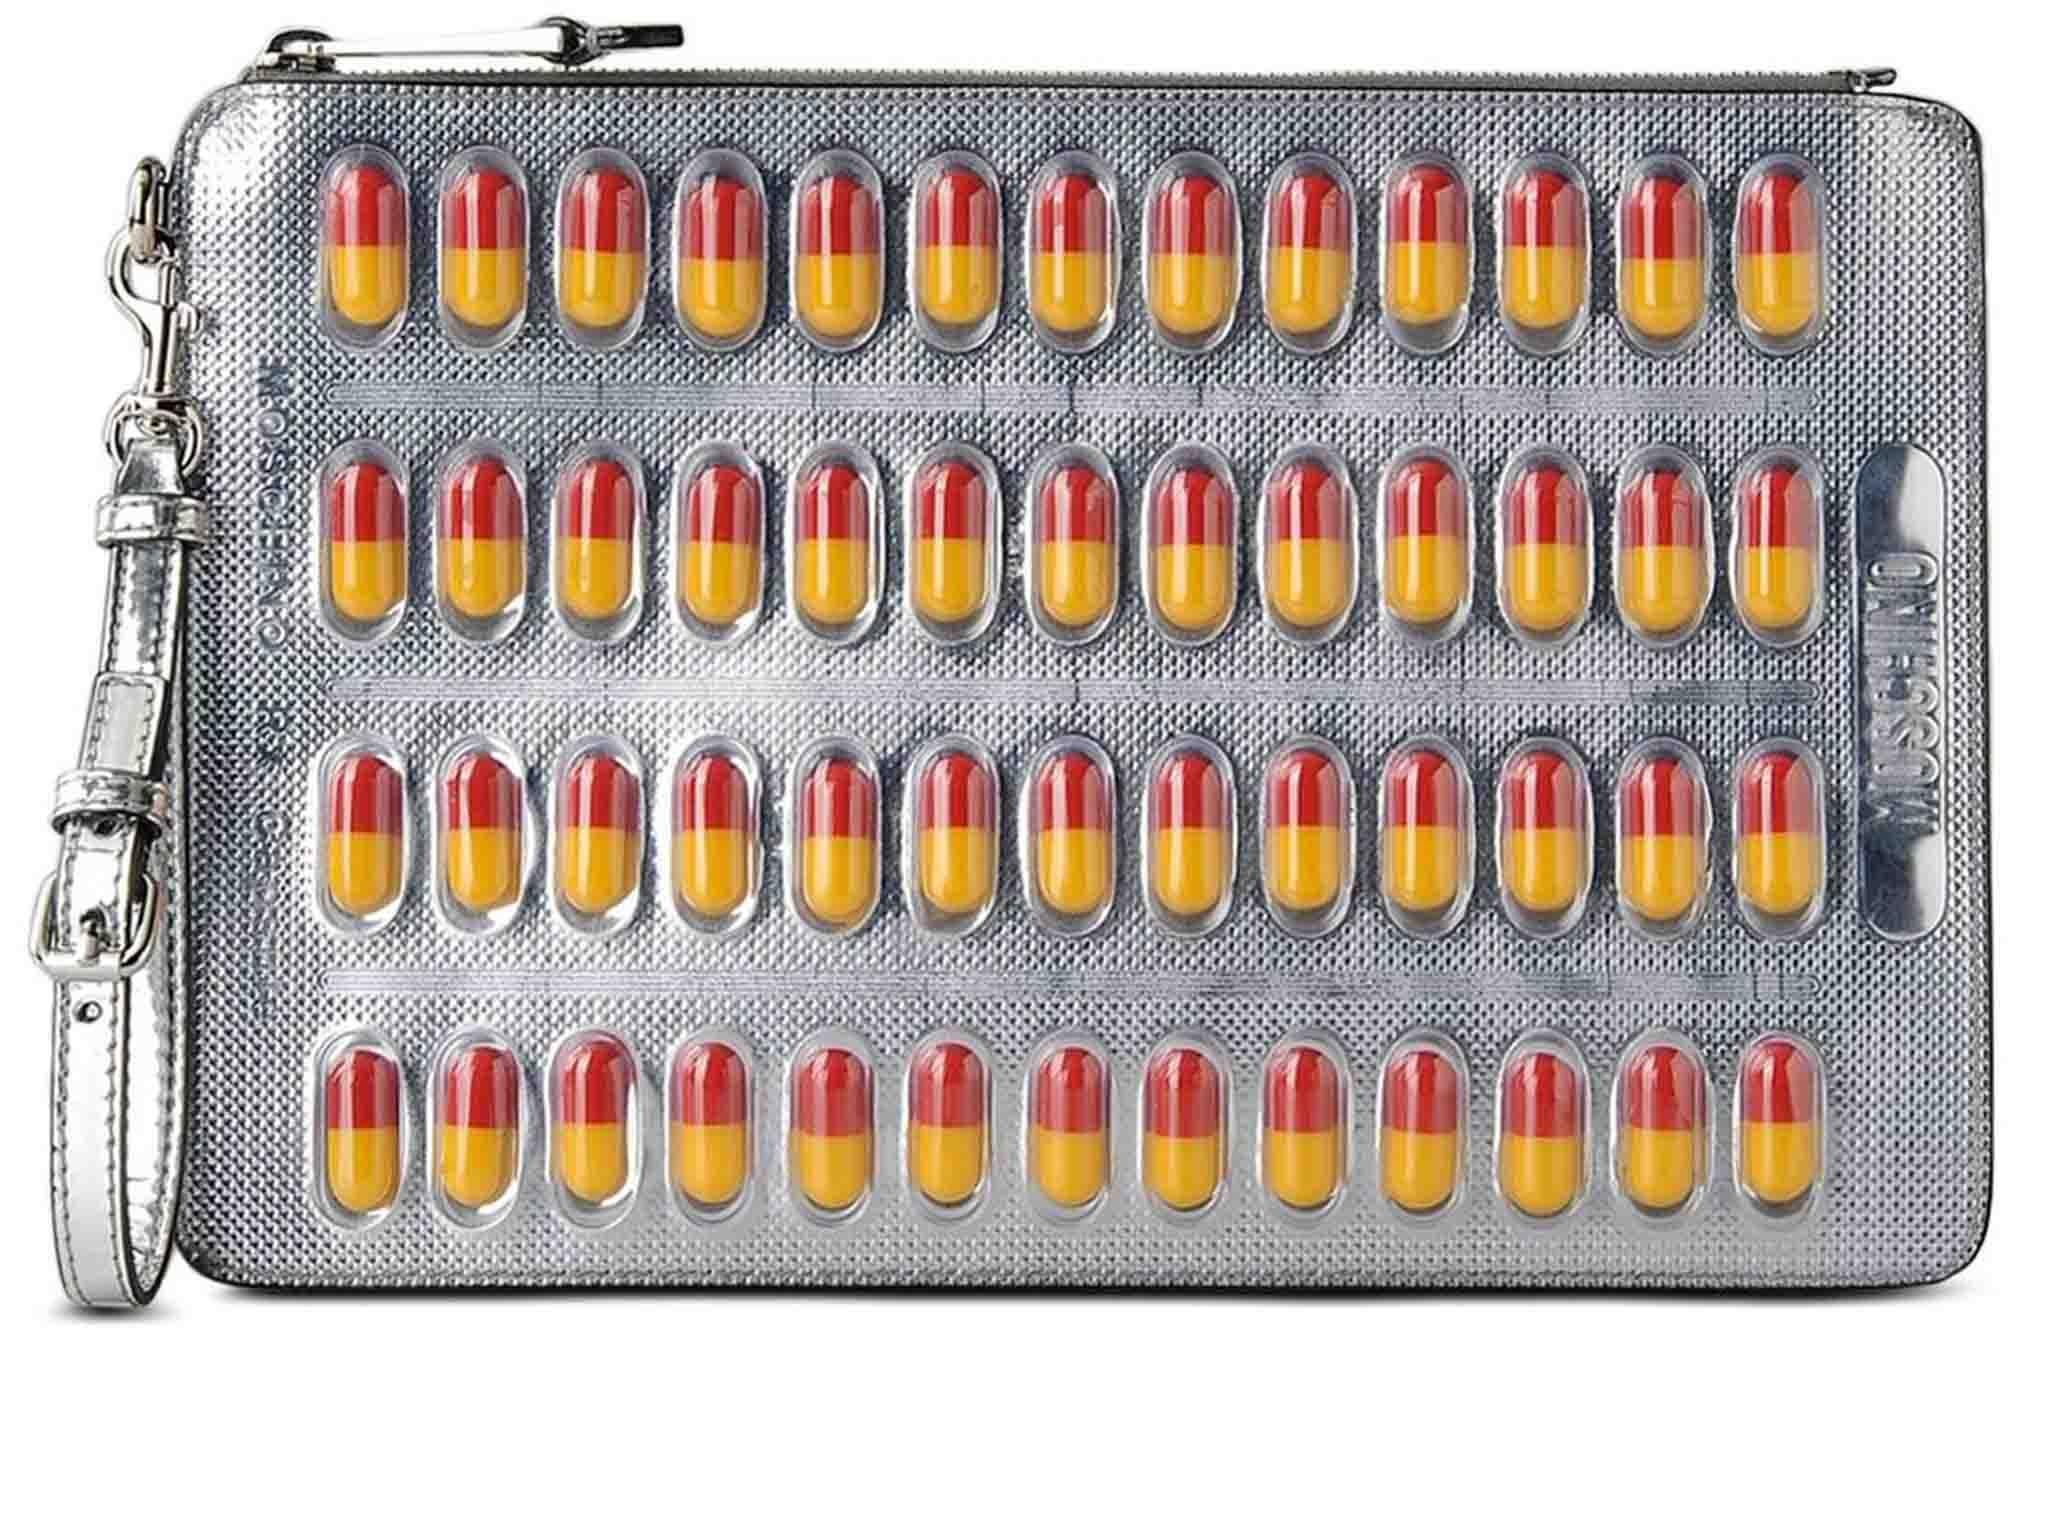 Moschino Pill Blister Pack Clutch, $602, farfetch.com